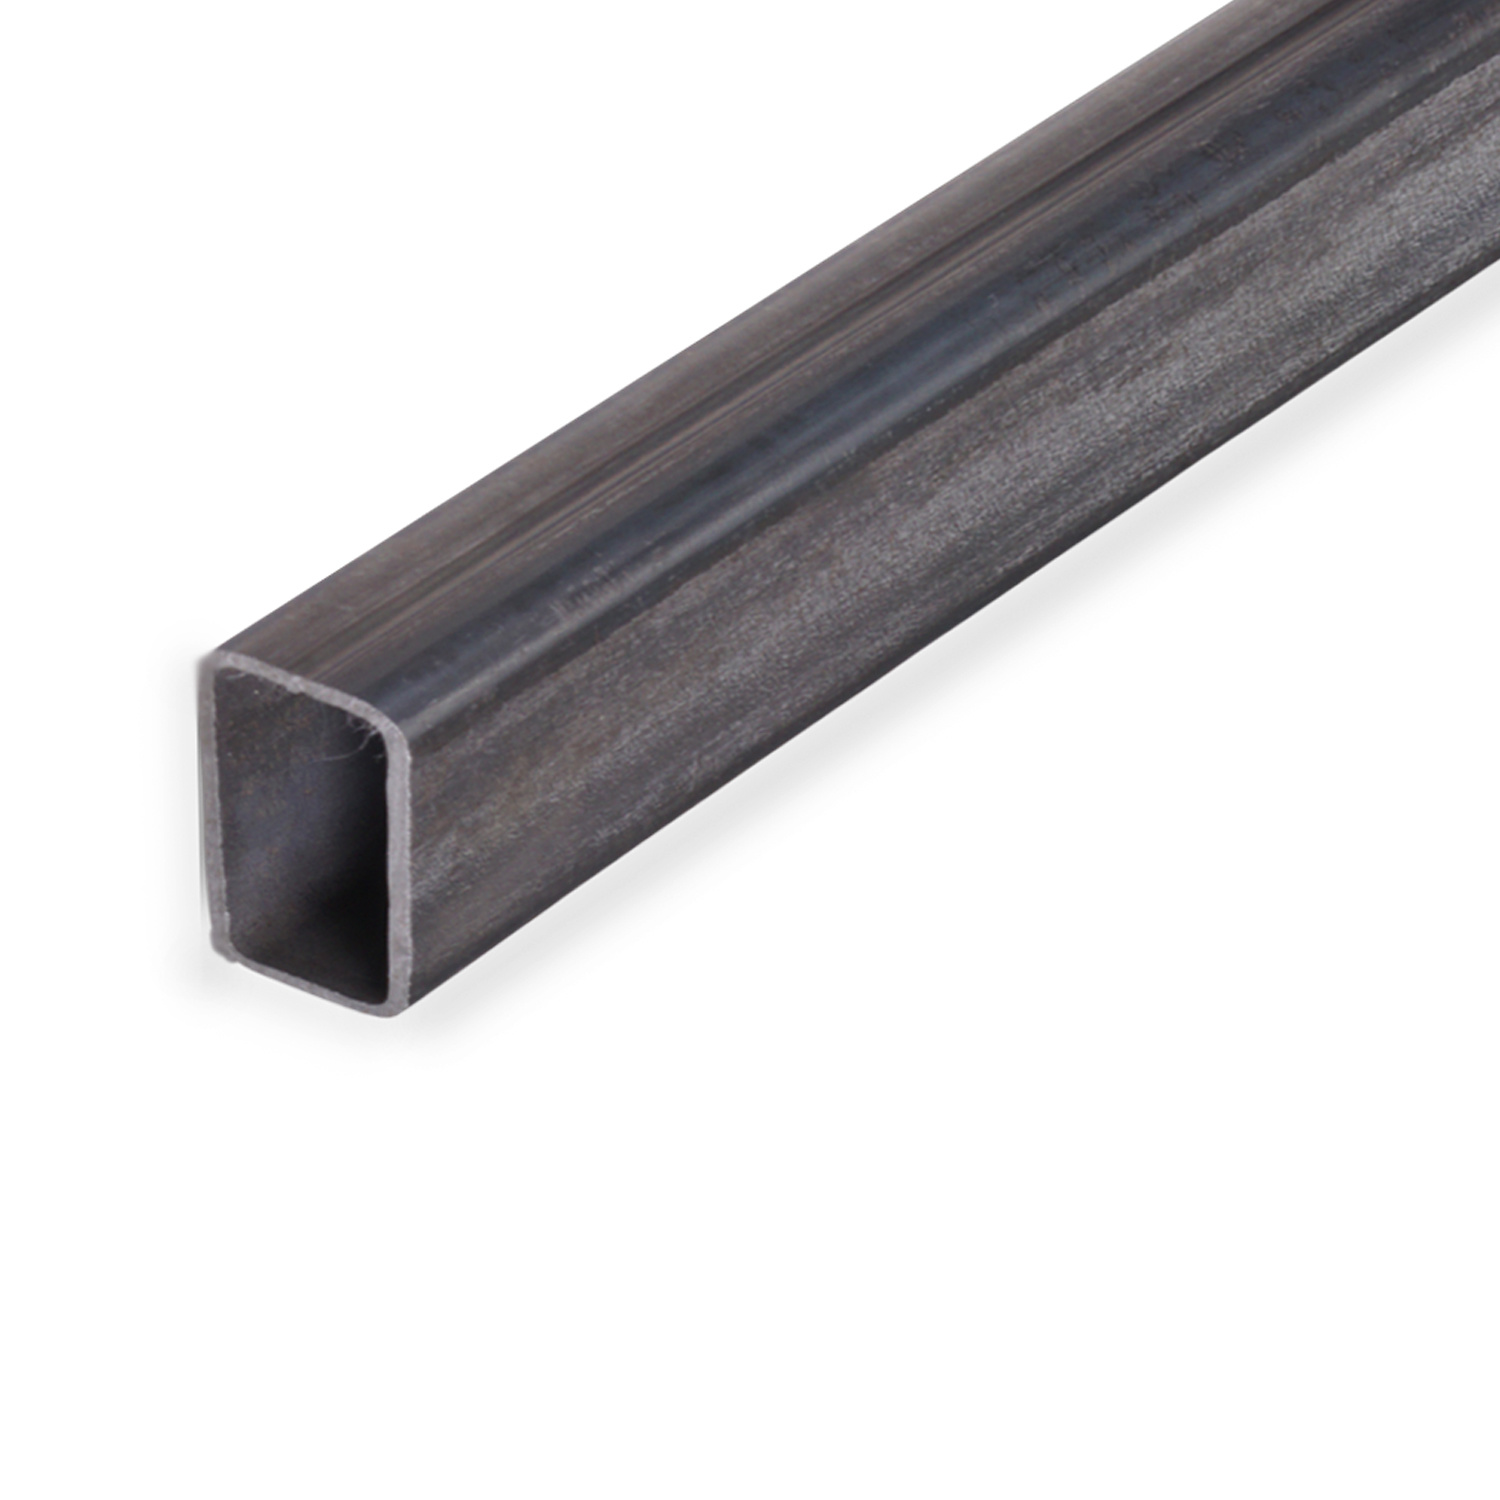  Koker staal - rechthoekige buis kokerprofiel KGV staal - S235JR - 50x30x3 MM